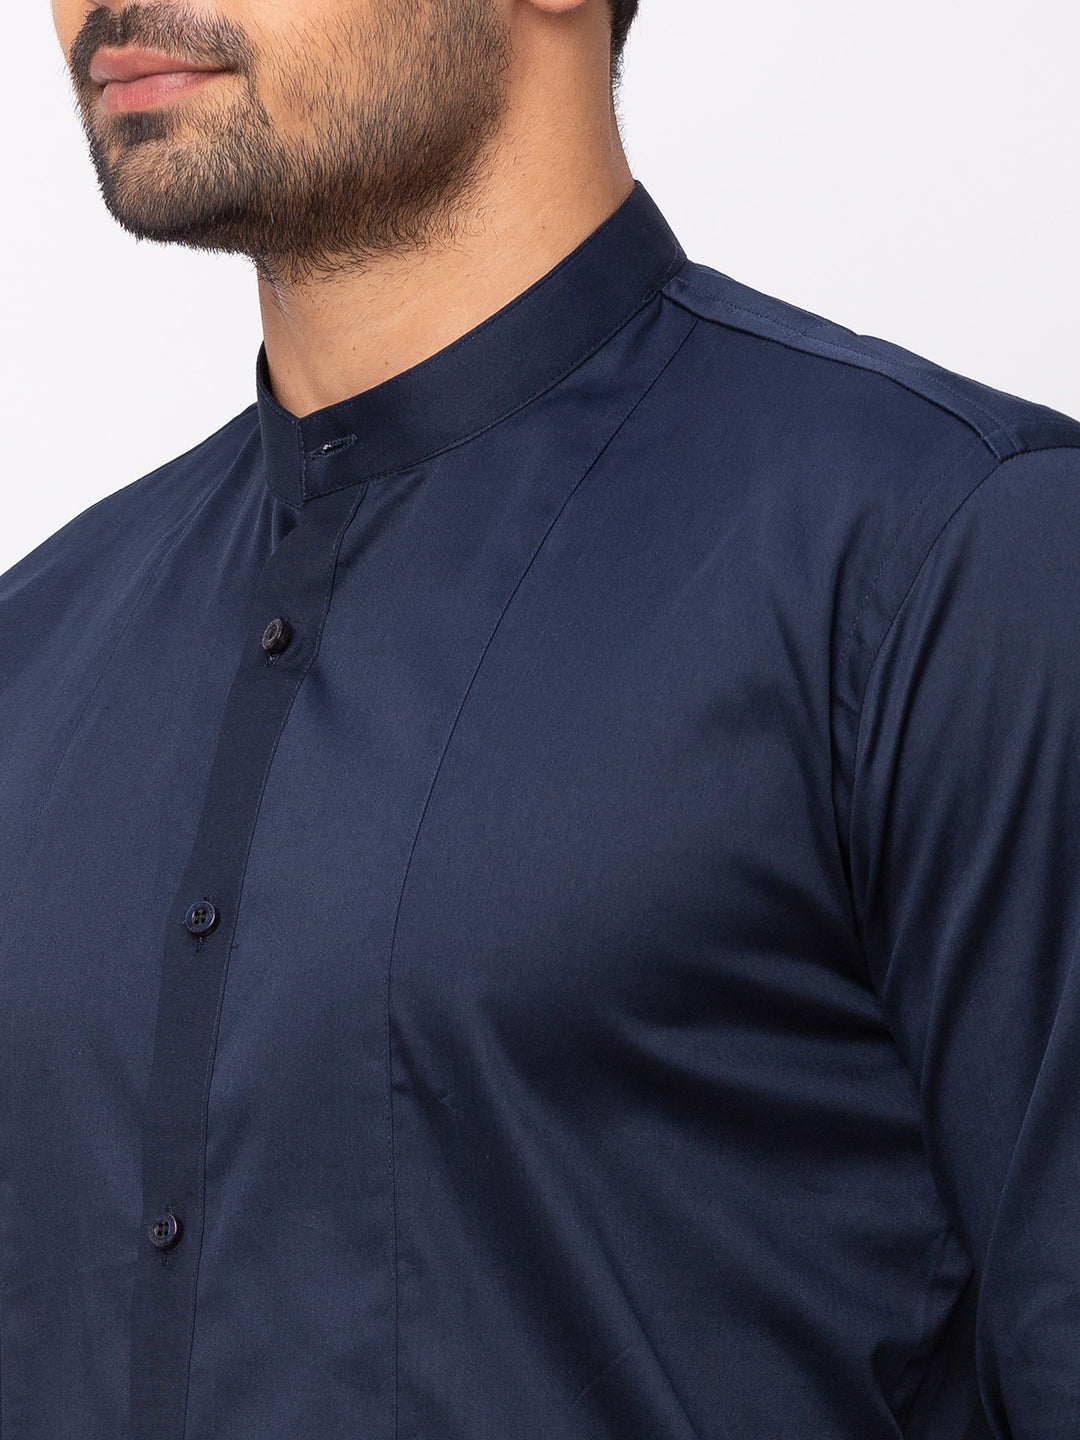 Navy Blue Formal Shirt with Mandarin Collar